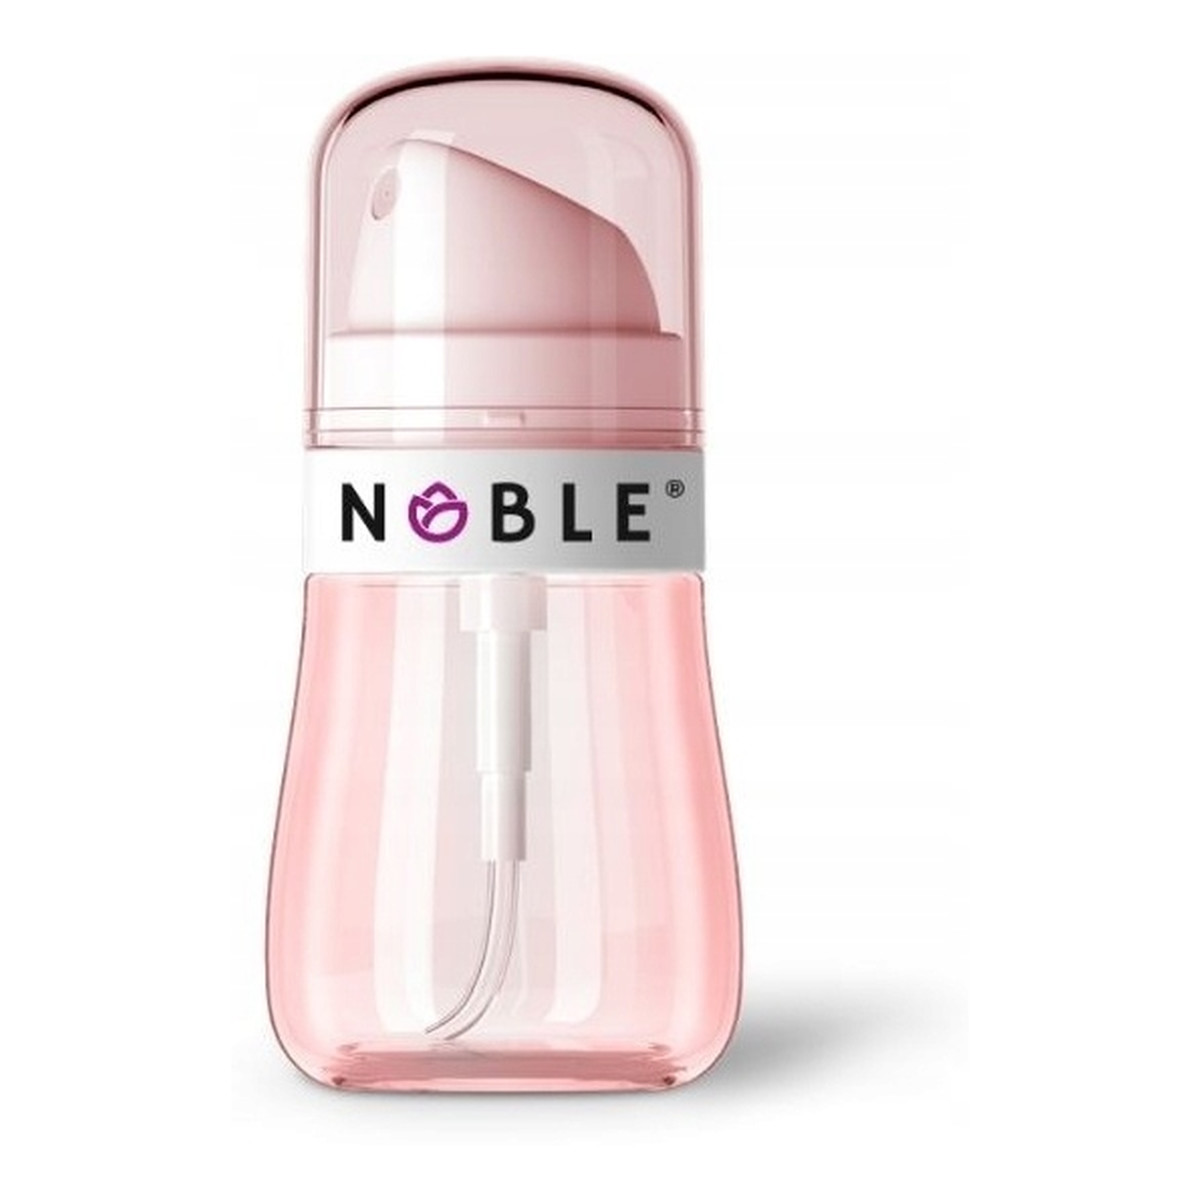 Noble Butelka z atomizerem Różowa 50ml